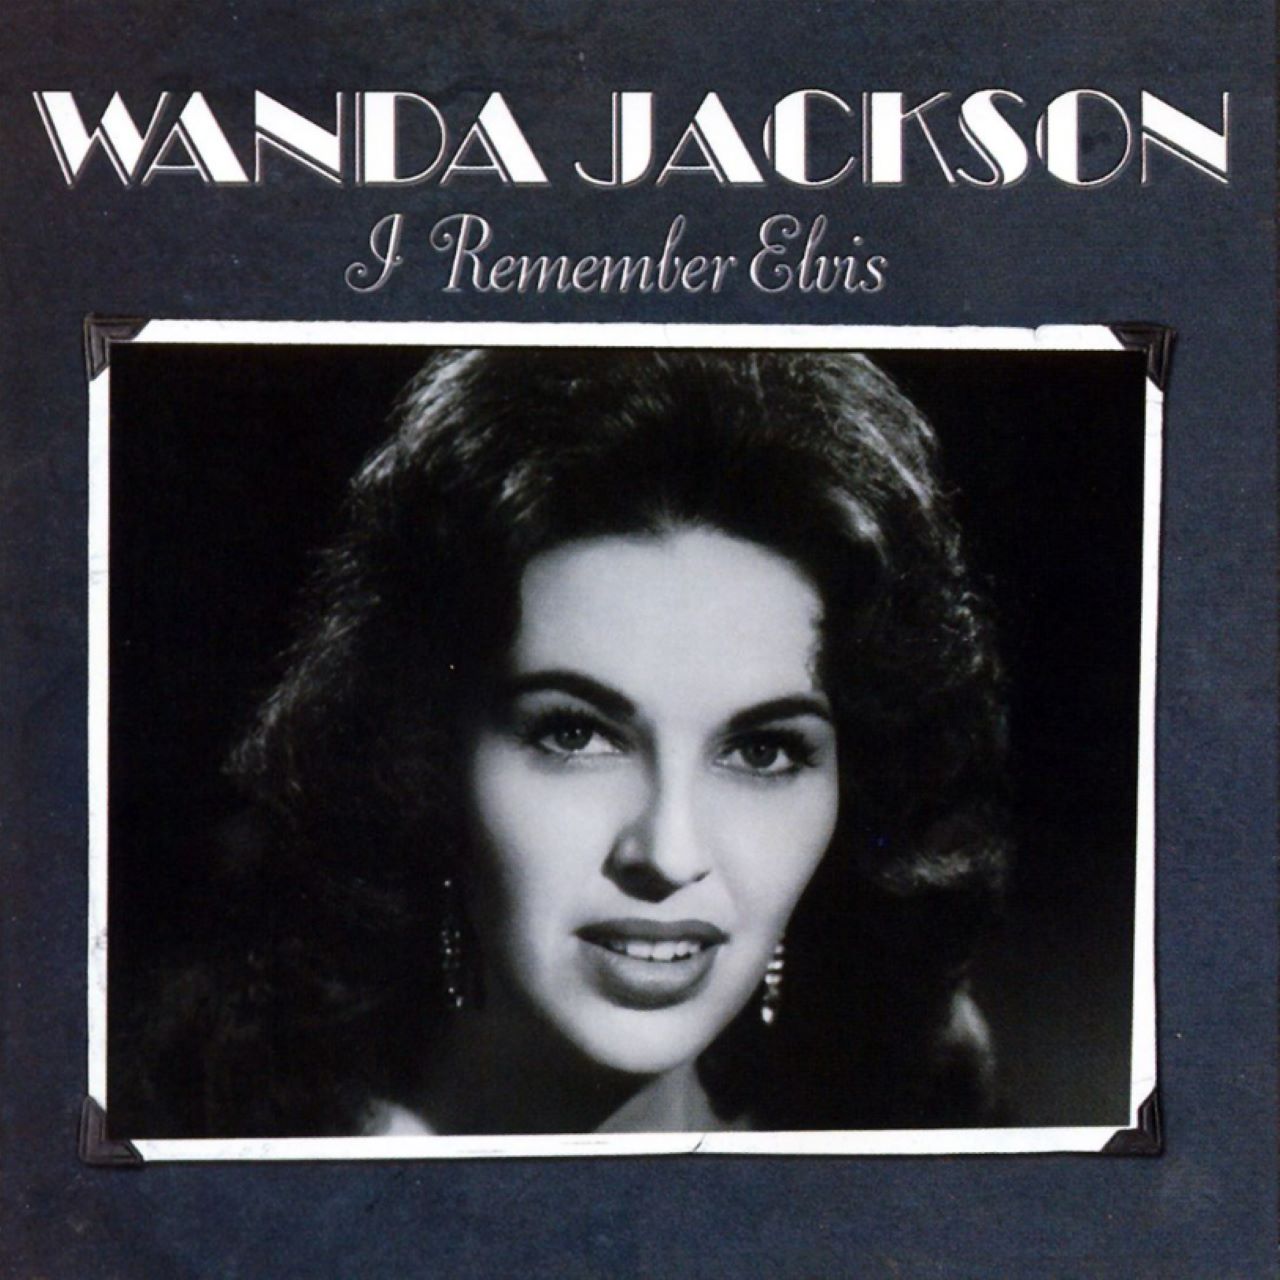 Wanda Jackson - I Remember Elvis cover album